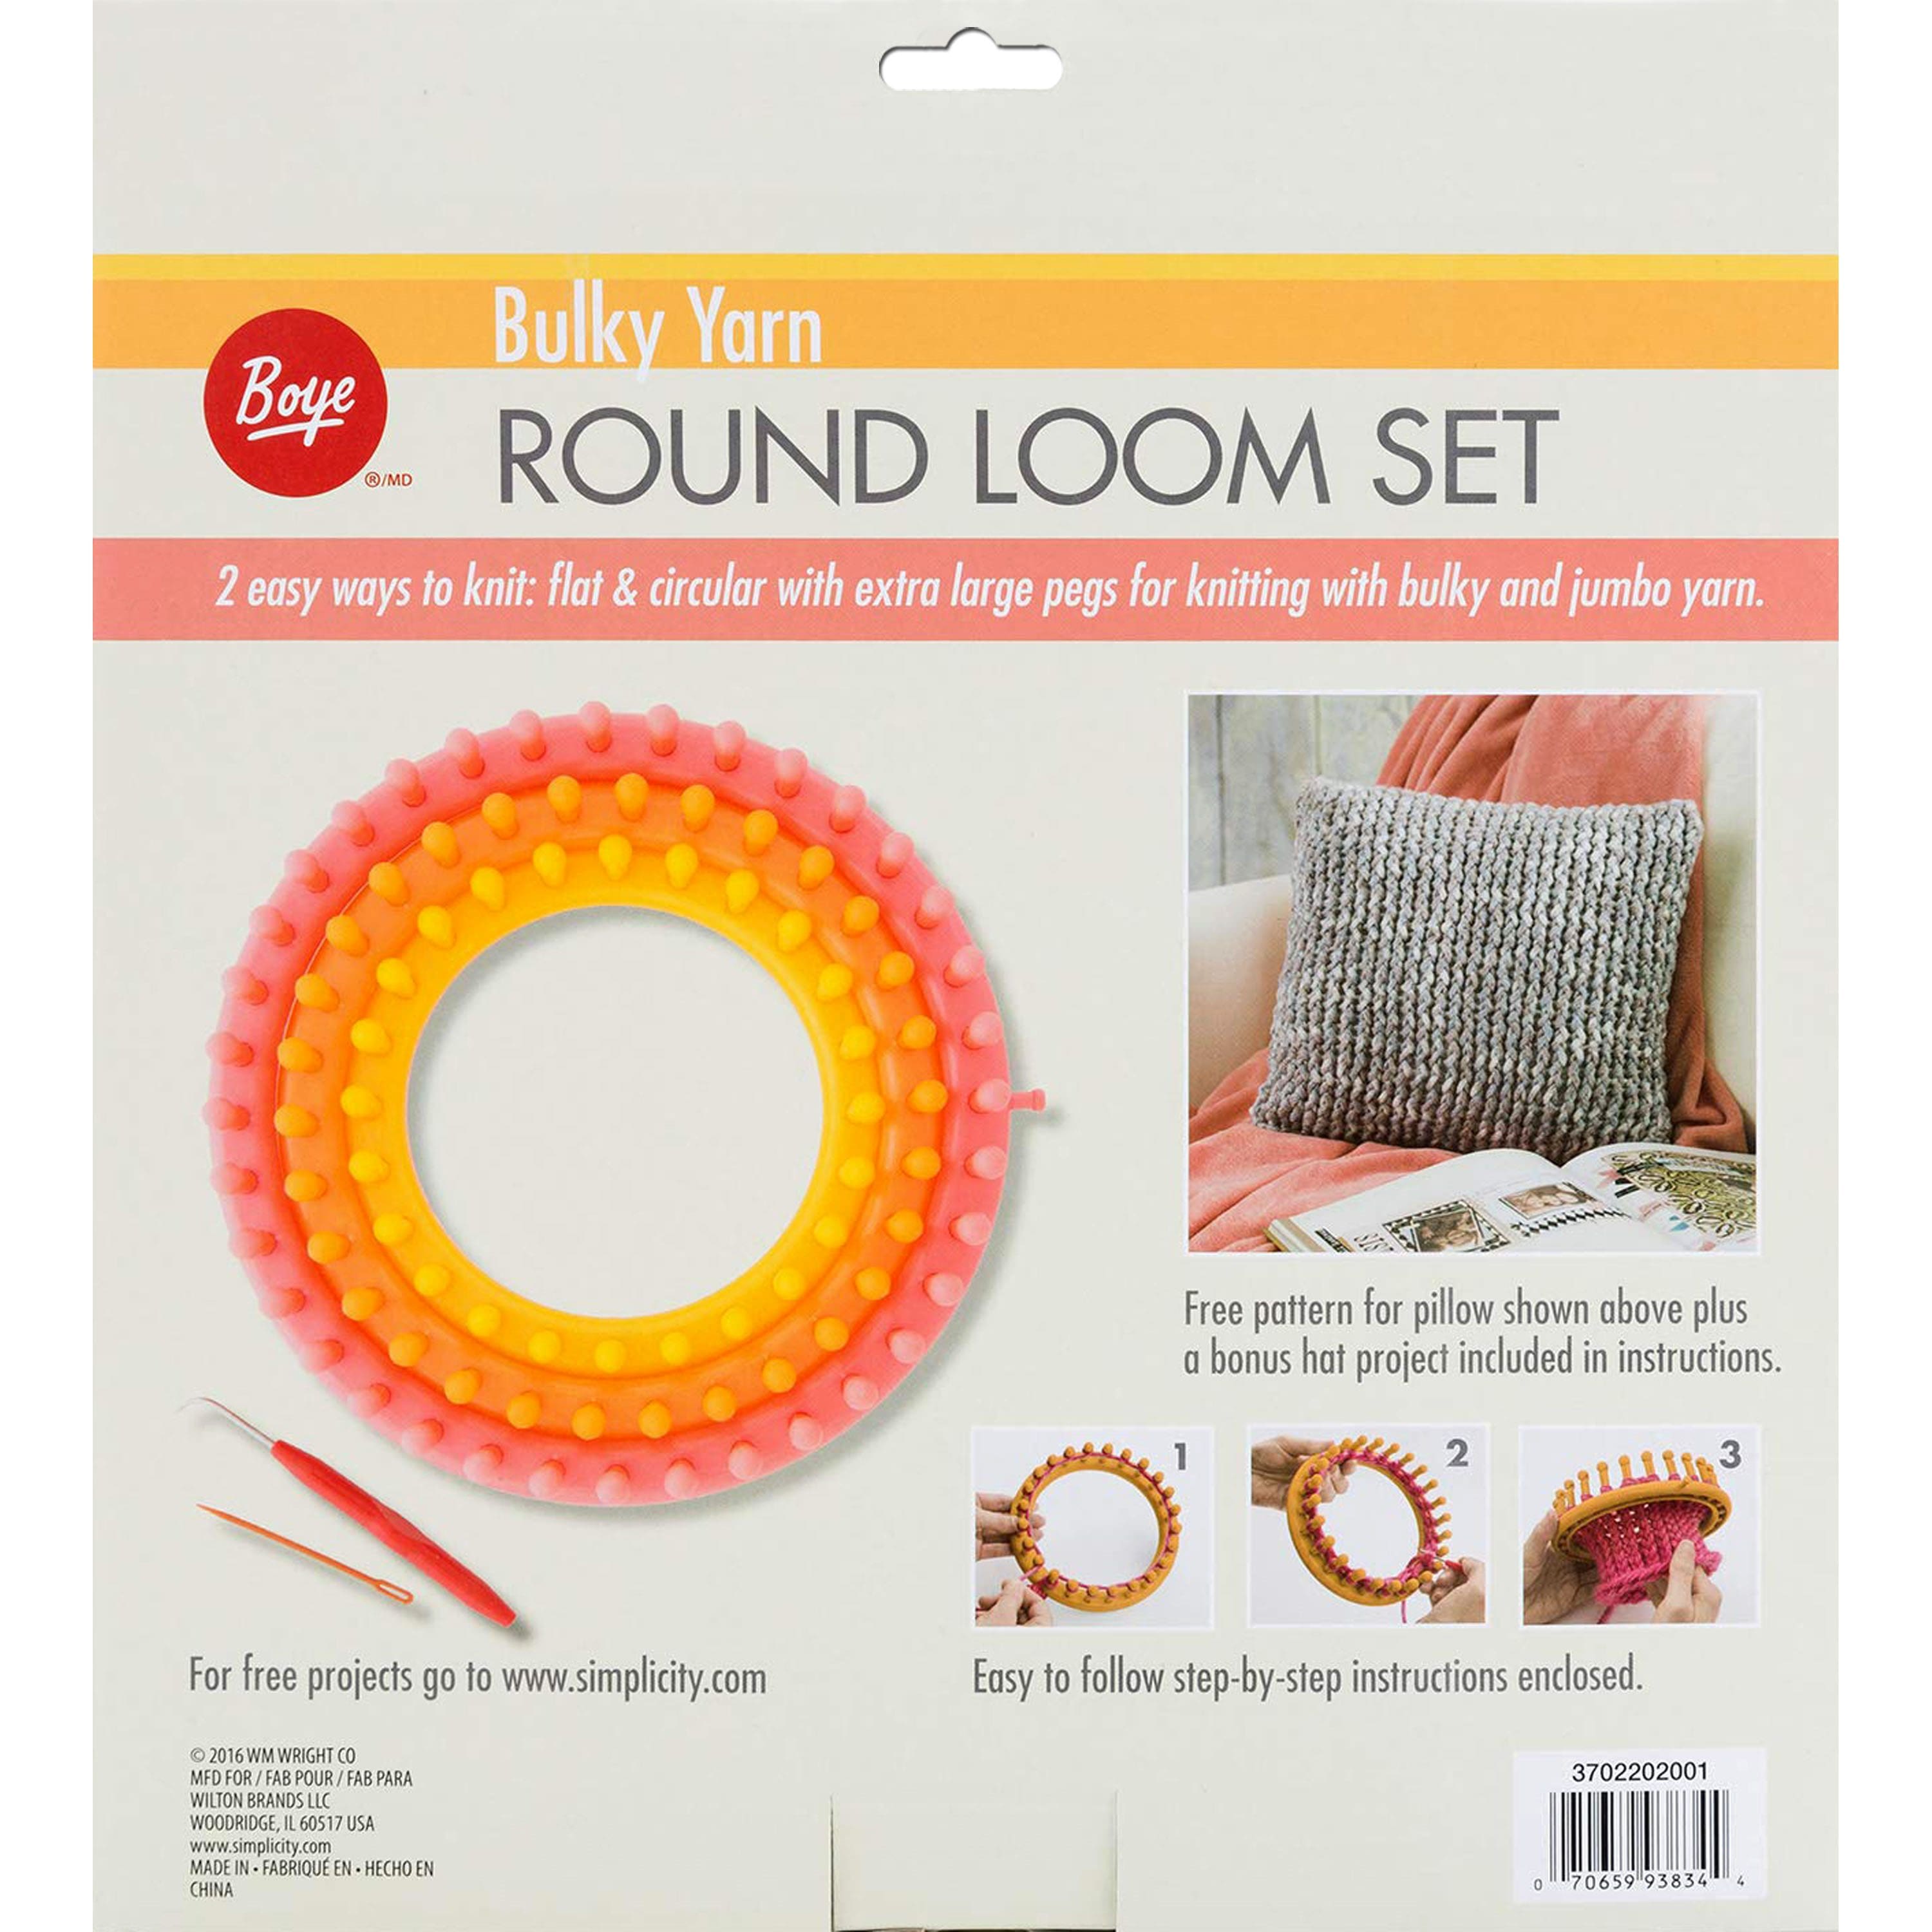 Boye Round Loom Set Simplicity Knitting Hook Needle Yarn Flower 